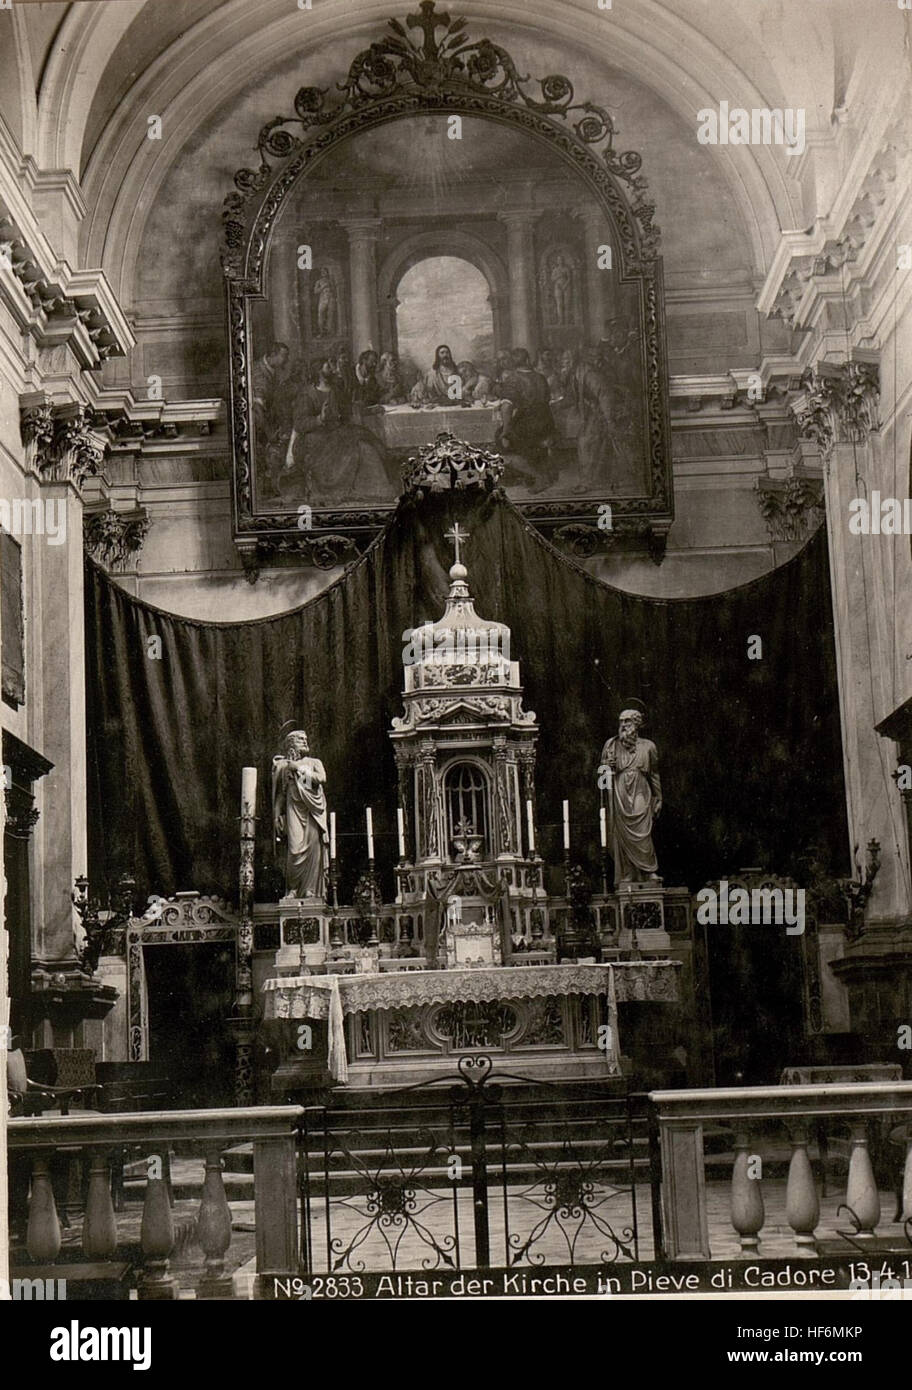 Altar der Kirche in Pieve di Cadore 13.4.18. 15617466) Stockfoto